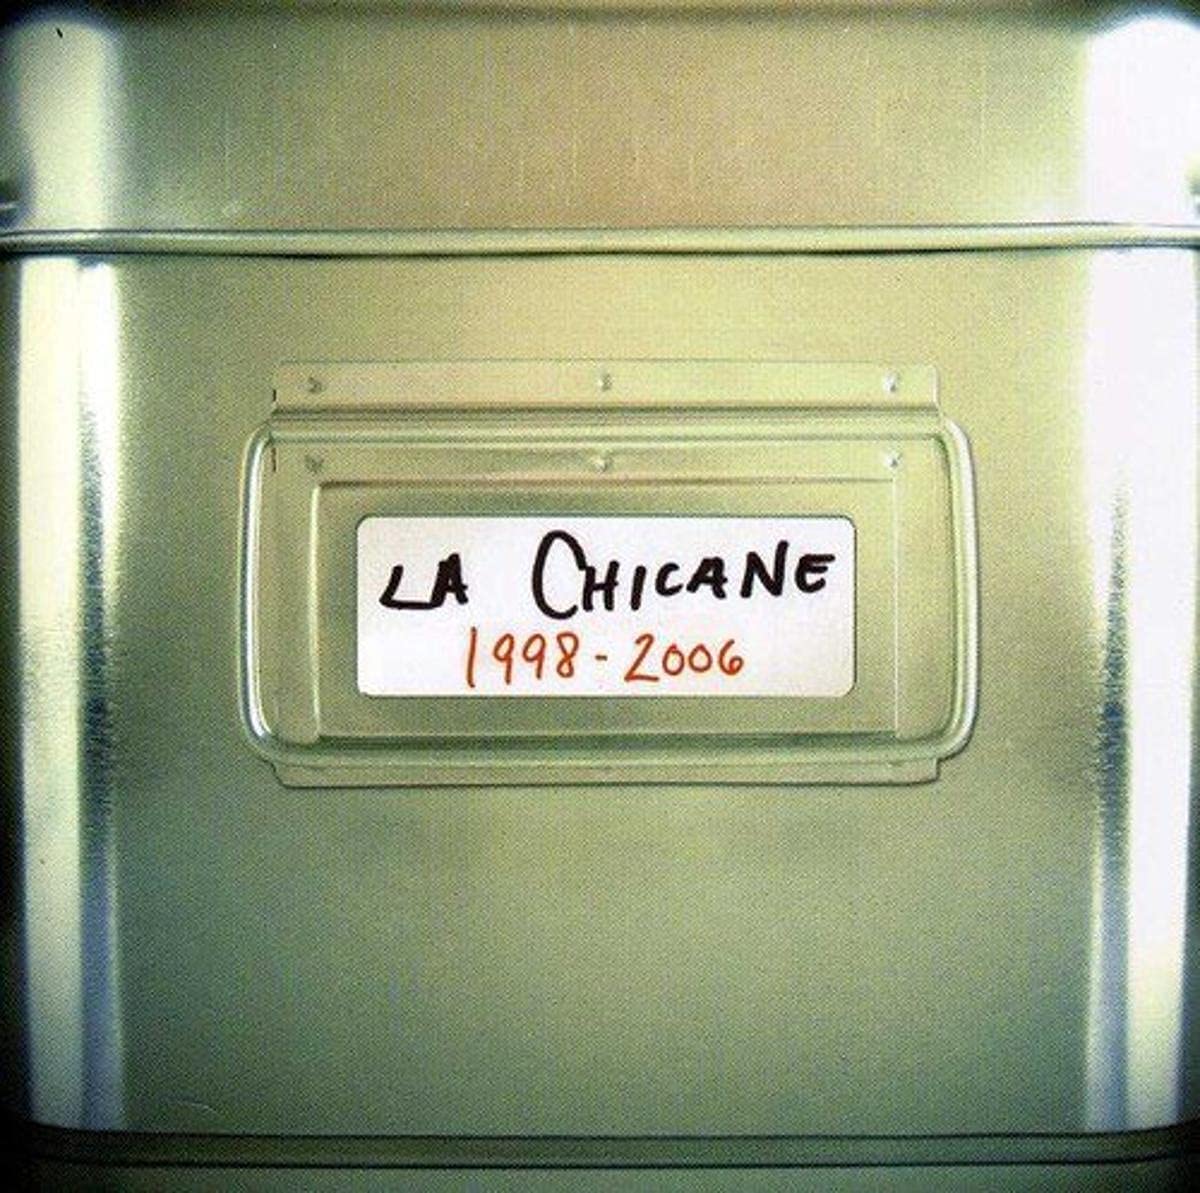 1998 - 2006 [Audio CD] La Chicane